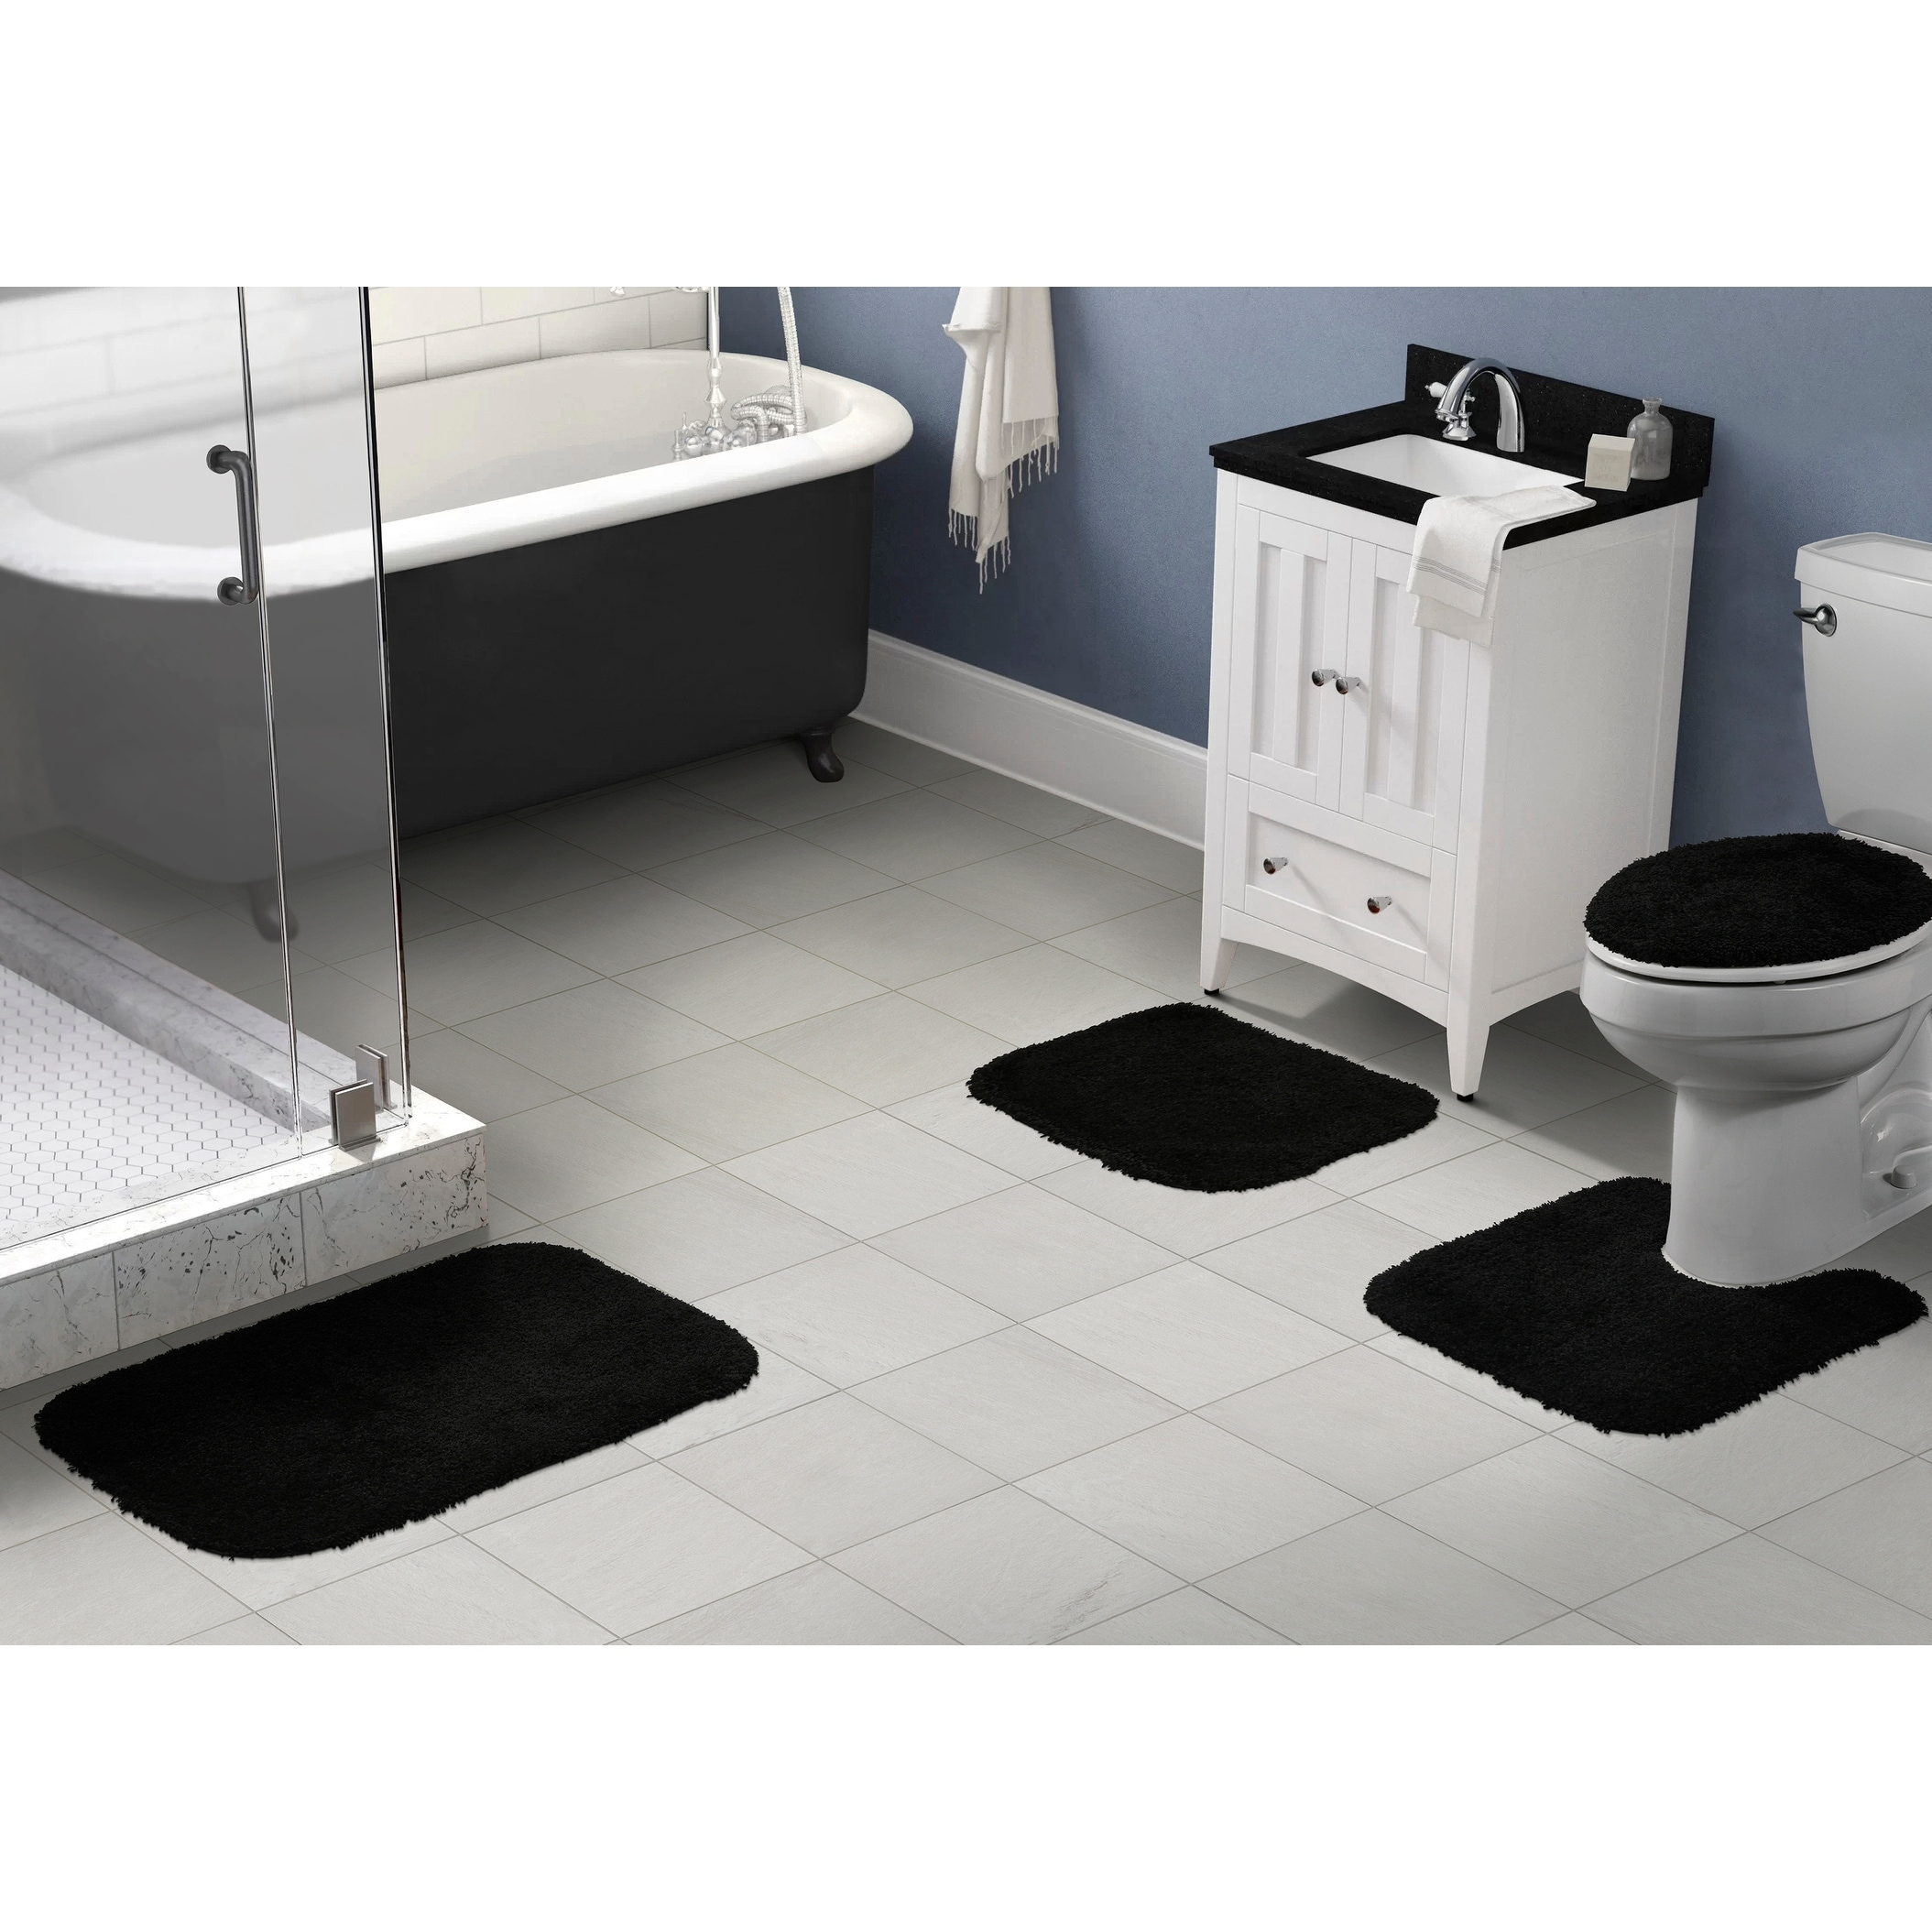 bathroom decor Better Homes & Gardens Bath Rug Cotton Reversible Washable,  17 x 24, Grey Shadow